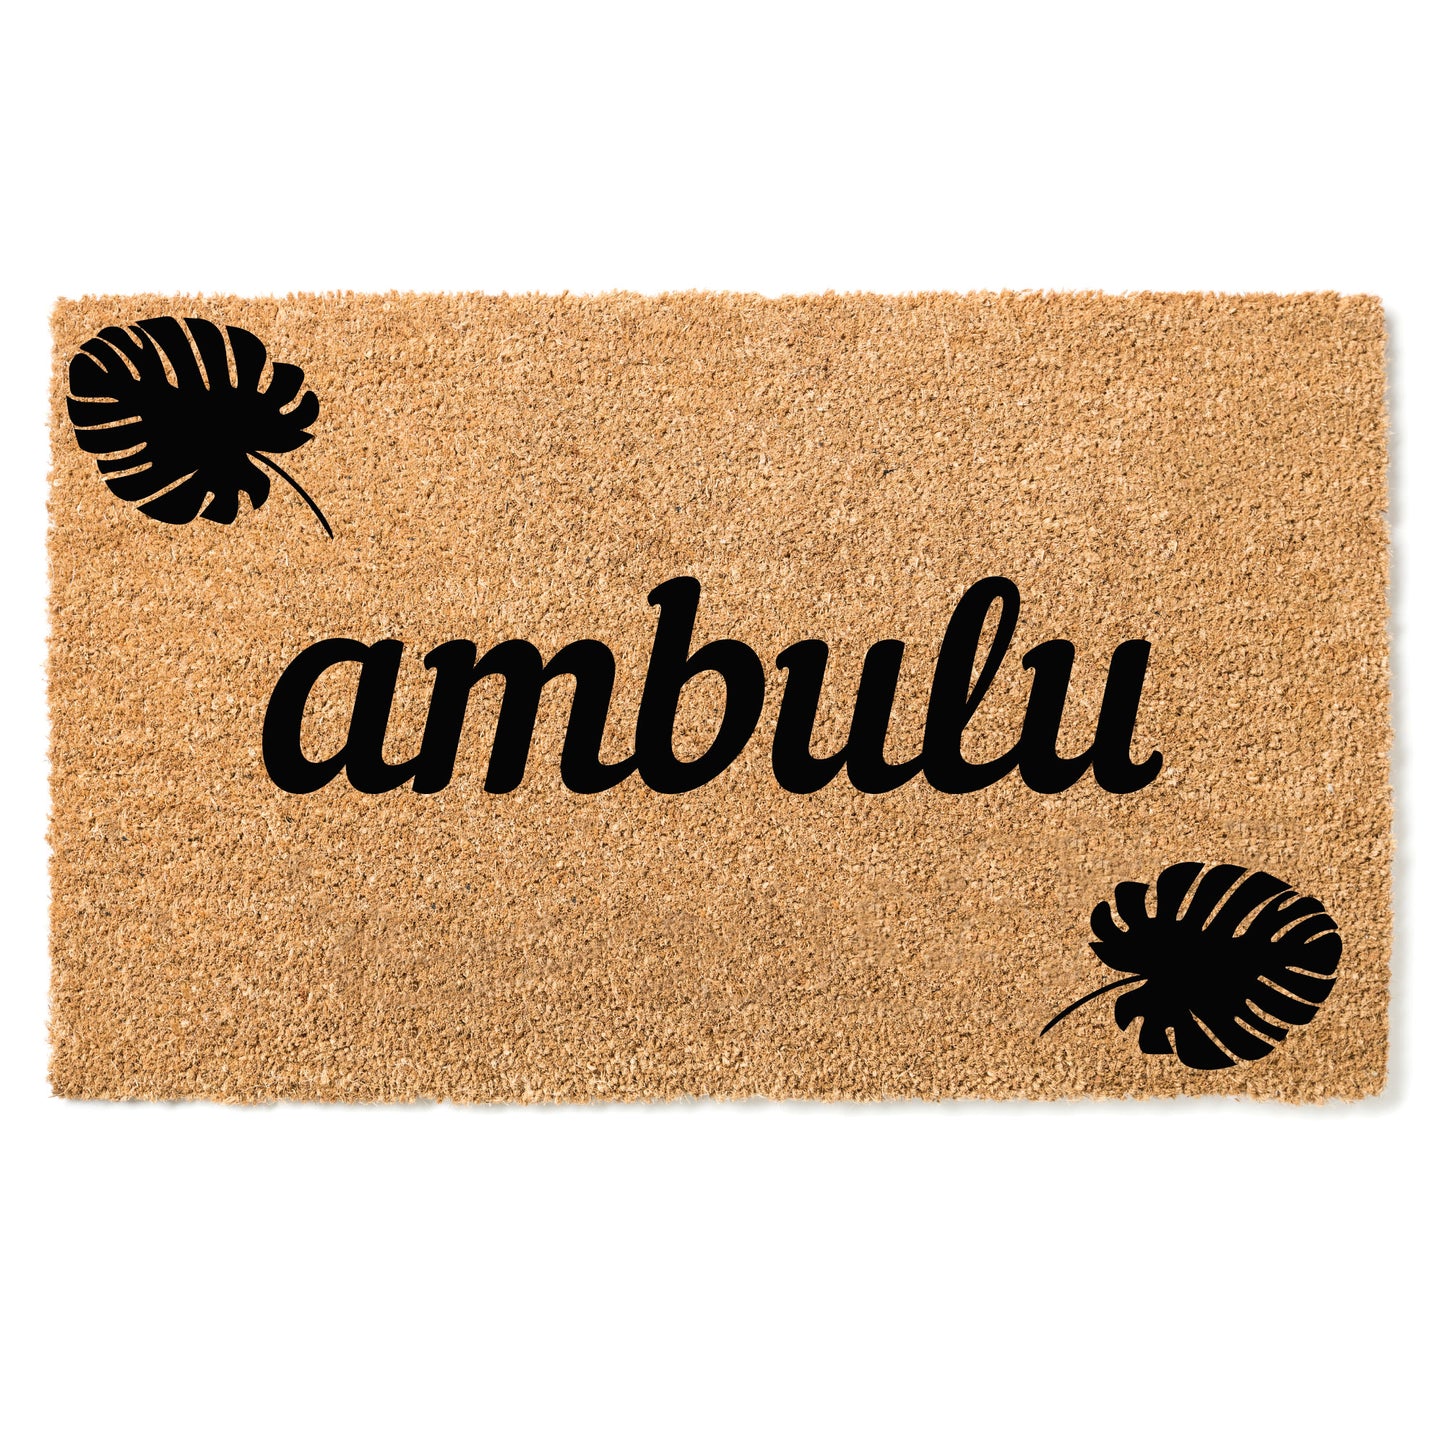 "Ambulu" door mat - Greeting in Téké